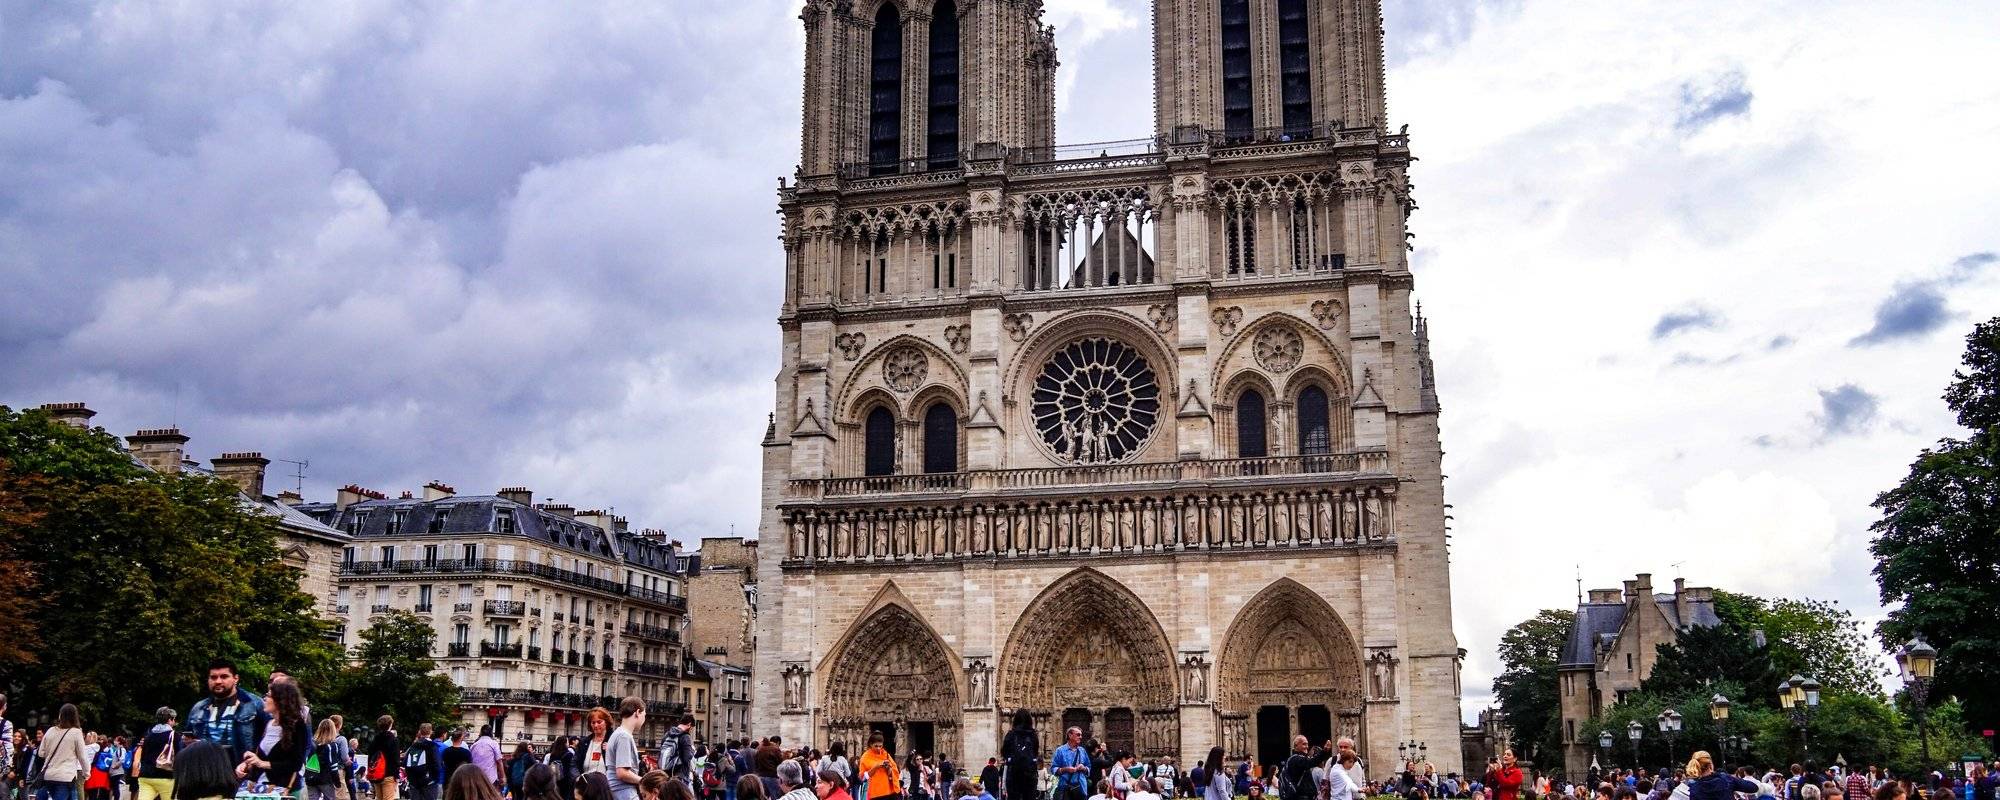 Travel Blog 33: Is Paris Your Dream City To Visit Too? (Part 2)